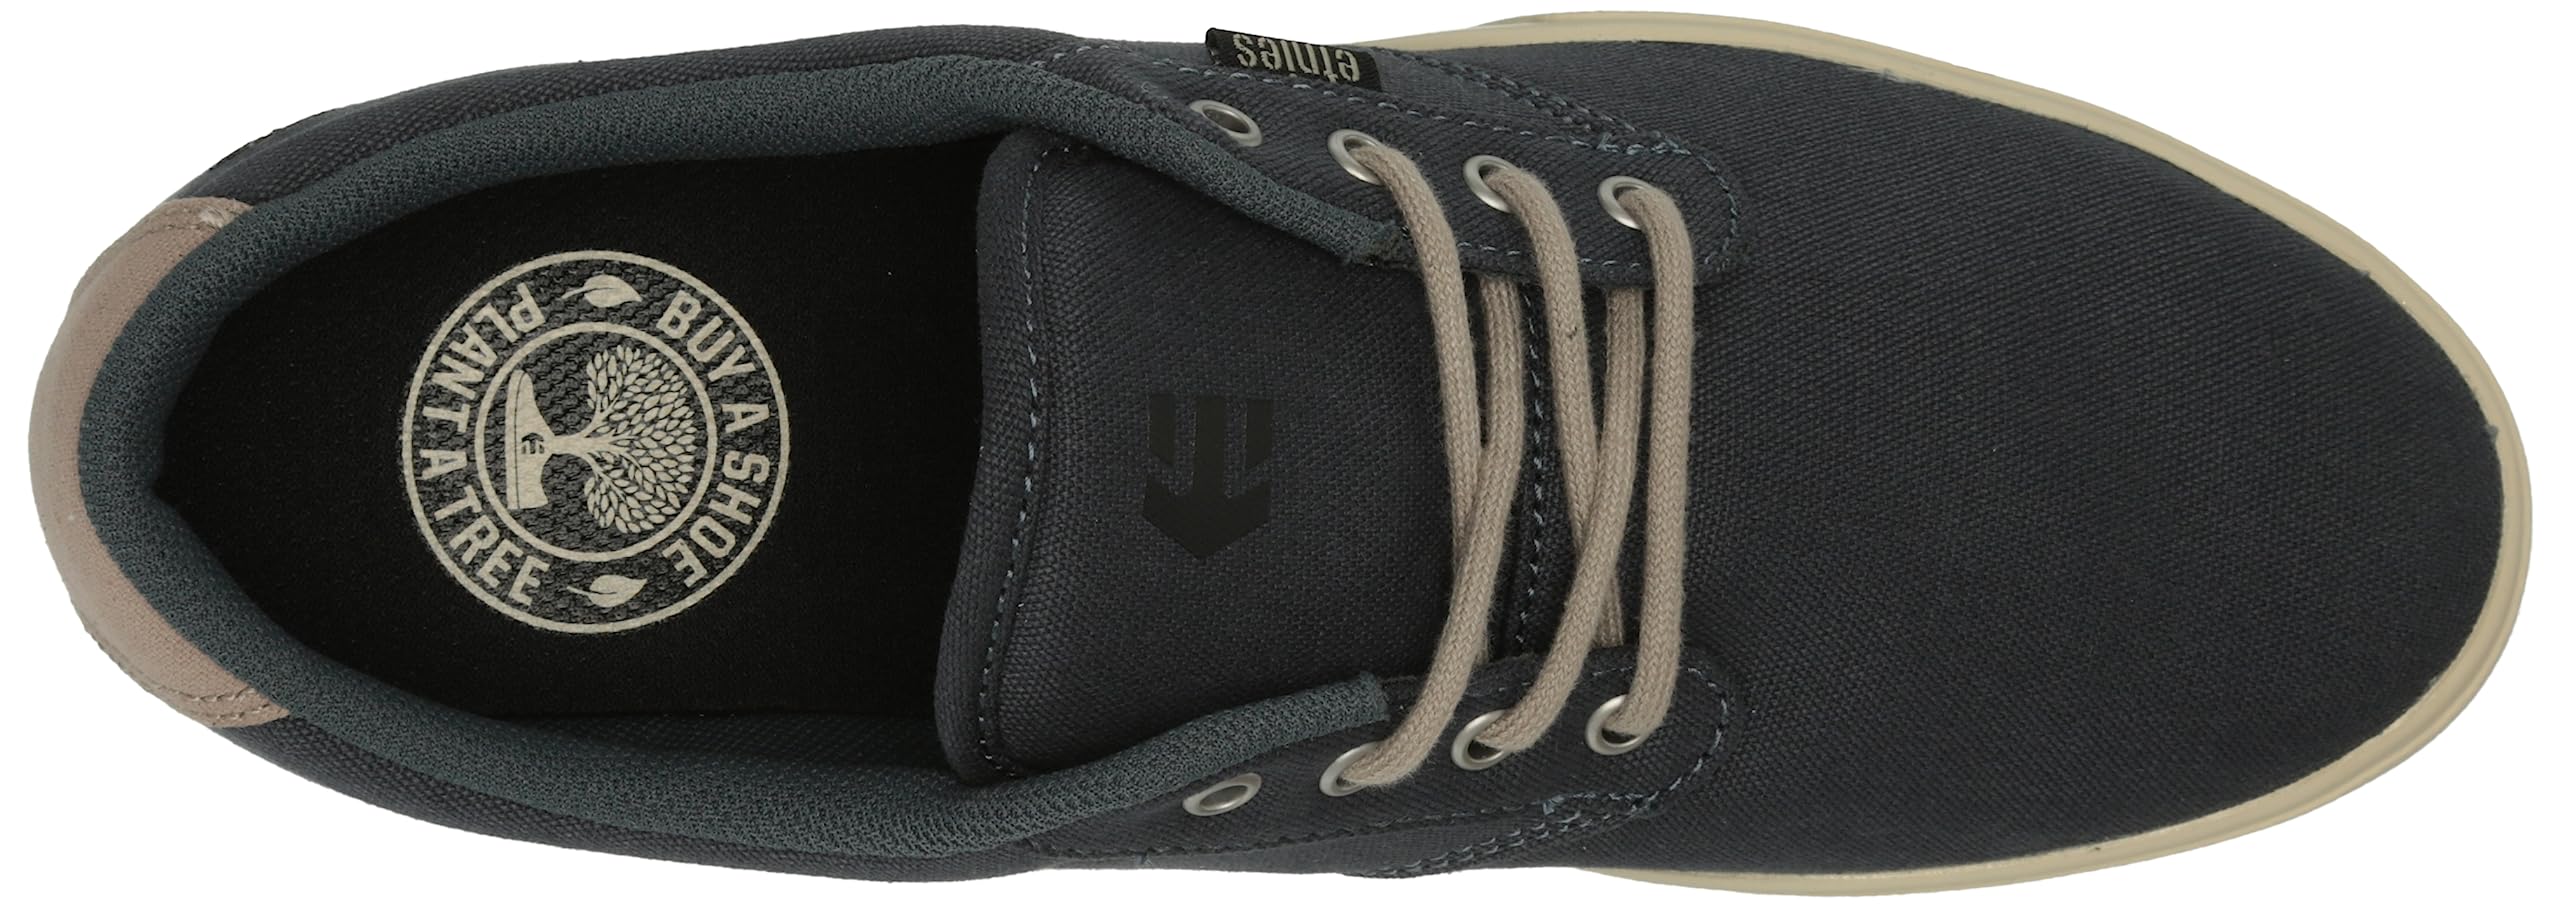 Etnies Men's Jameson 2 Eco Skate Shoe